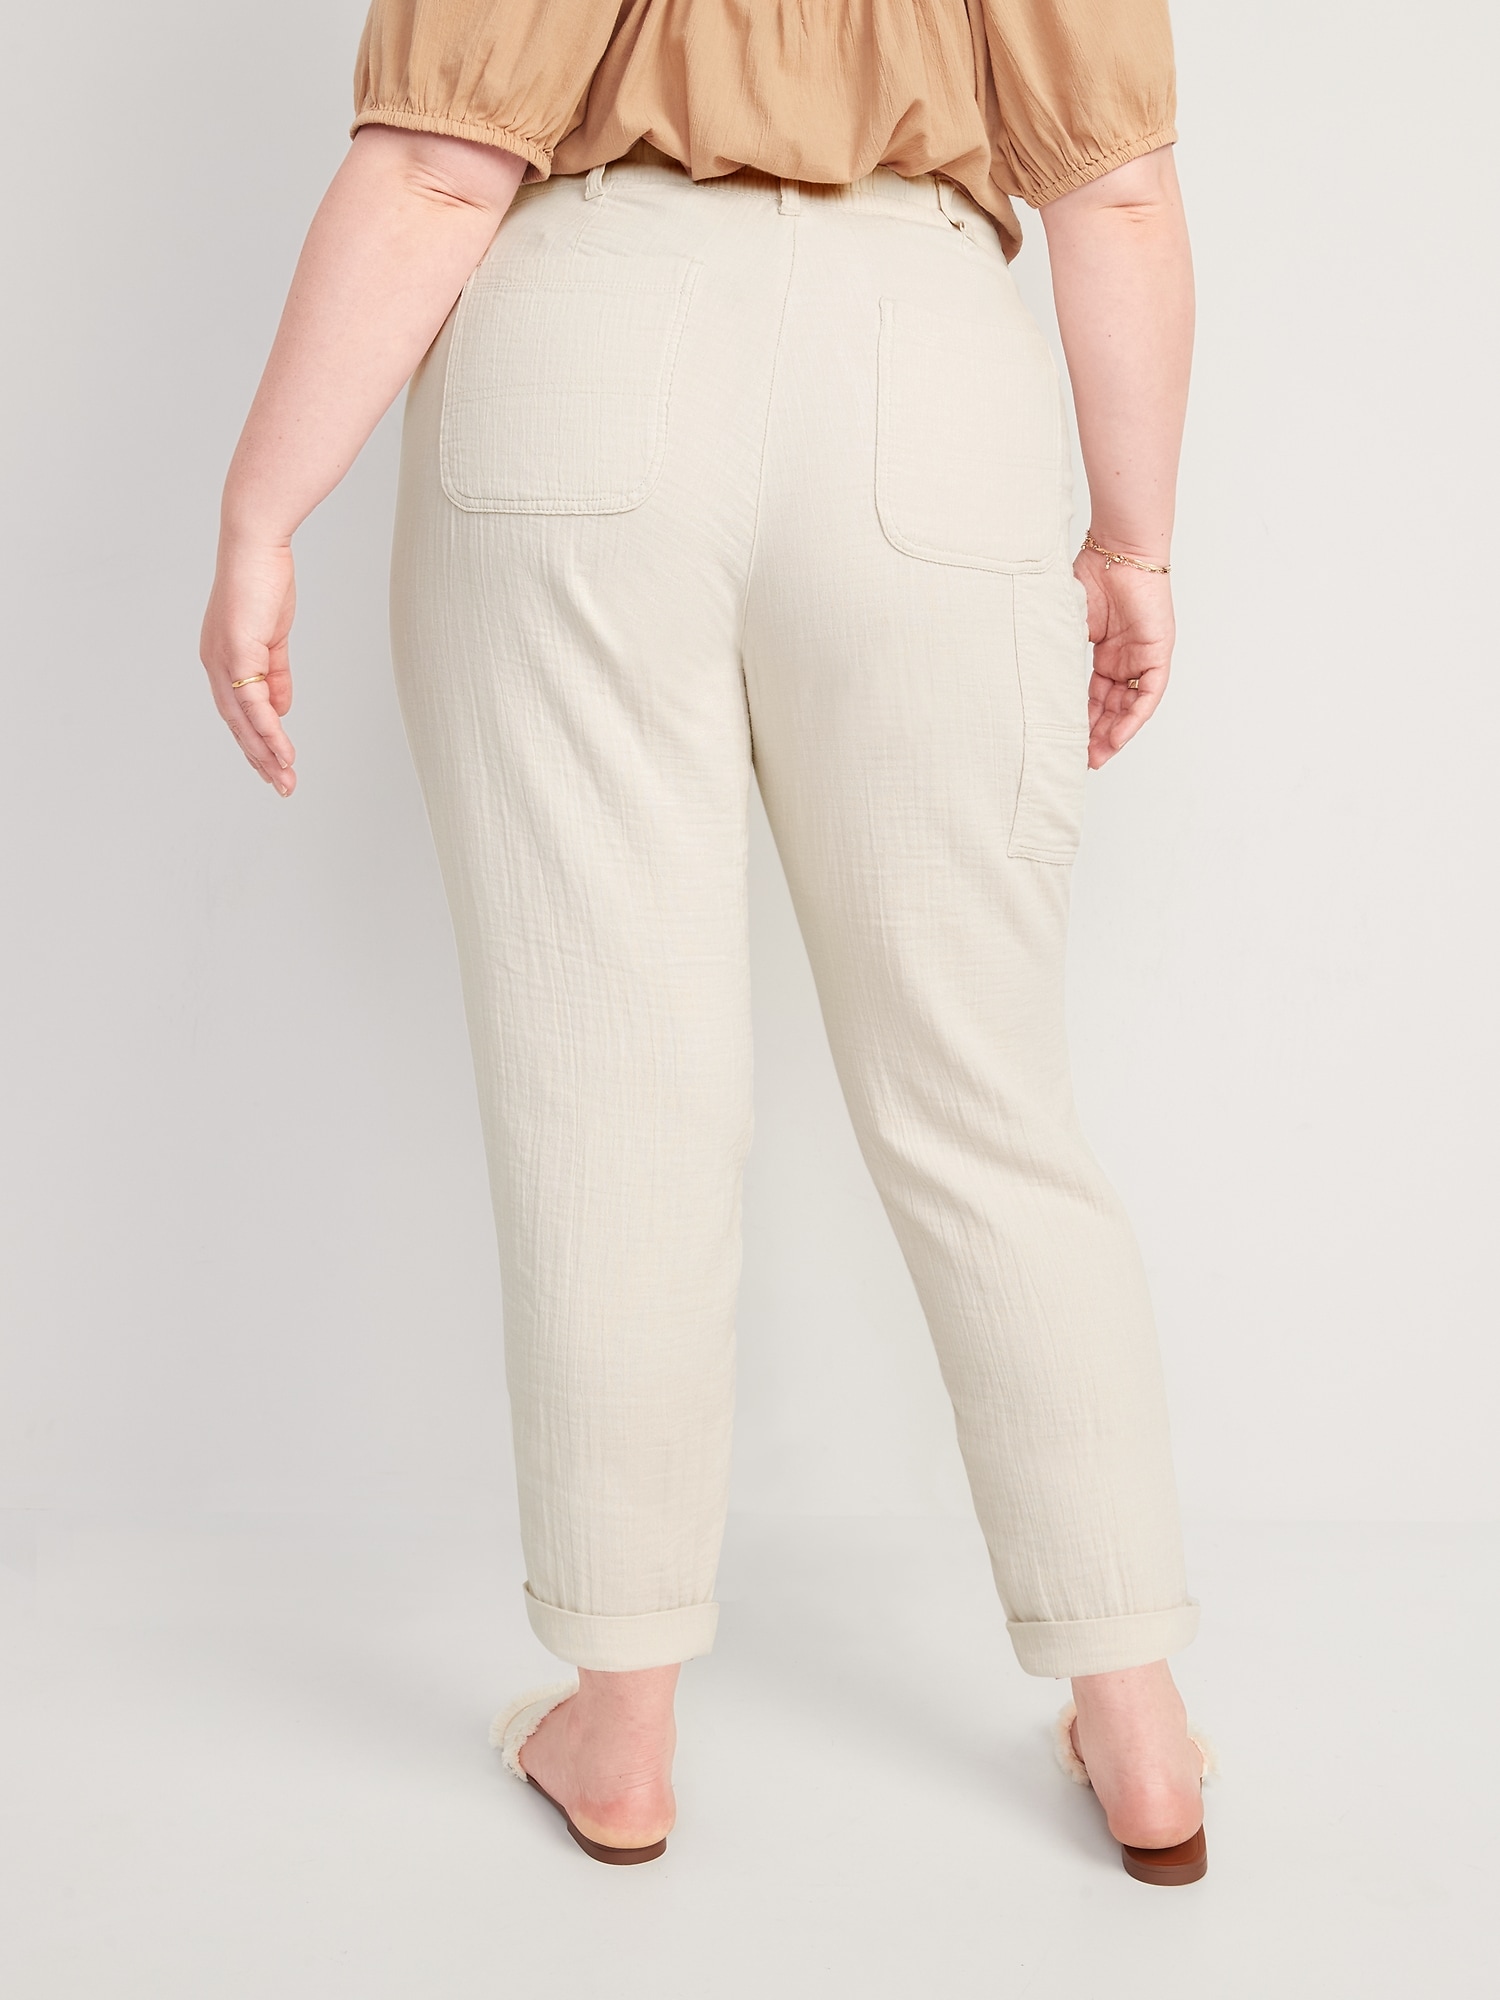 Old Navy Hi-Waist Cropped Tapered Pants Women’s Plus Size 14 Gauze Slub …